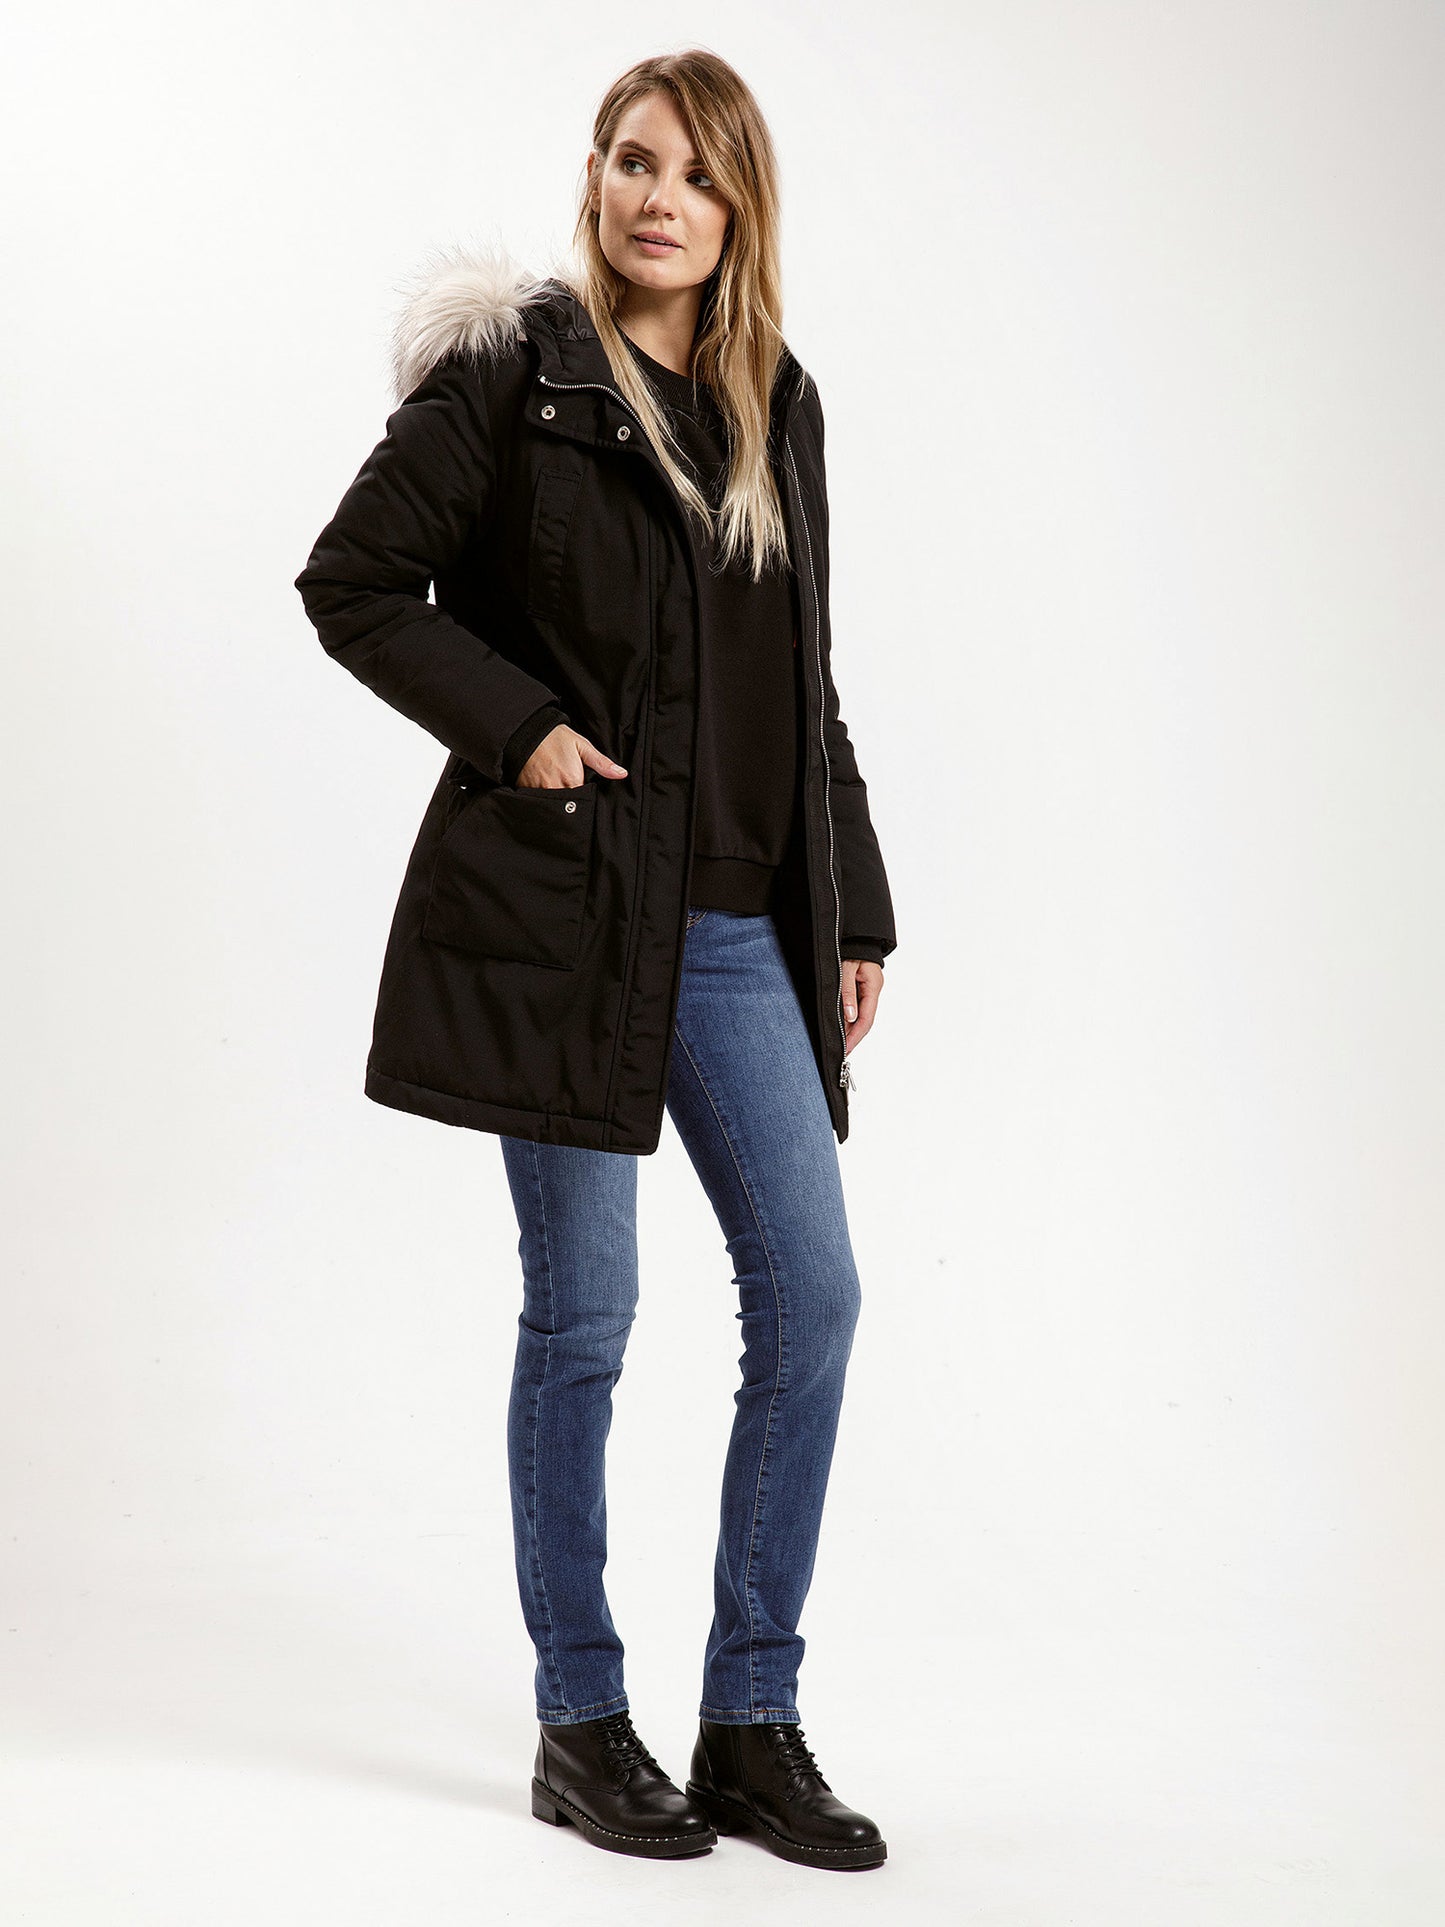 Women's regular winter jacket in black with faux fur trim